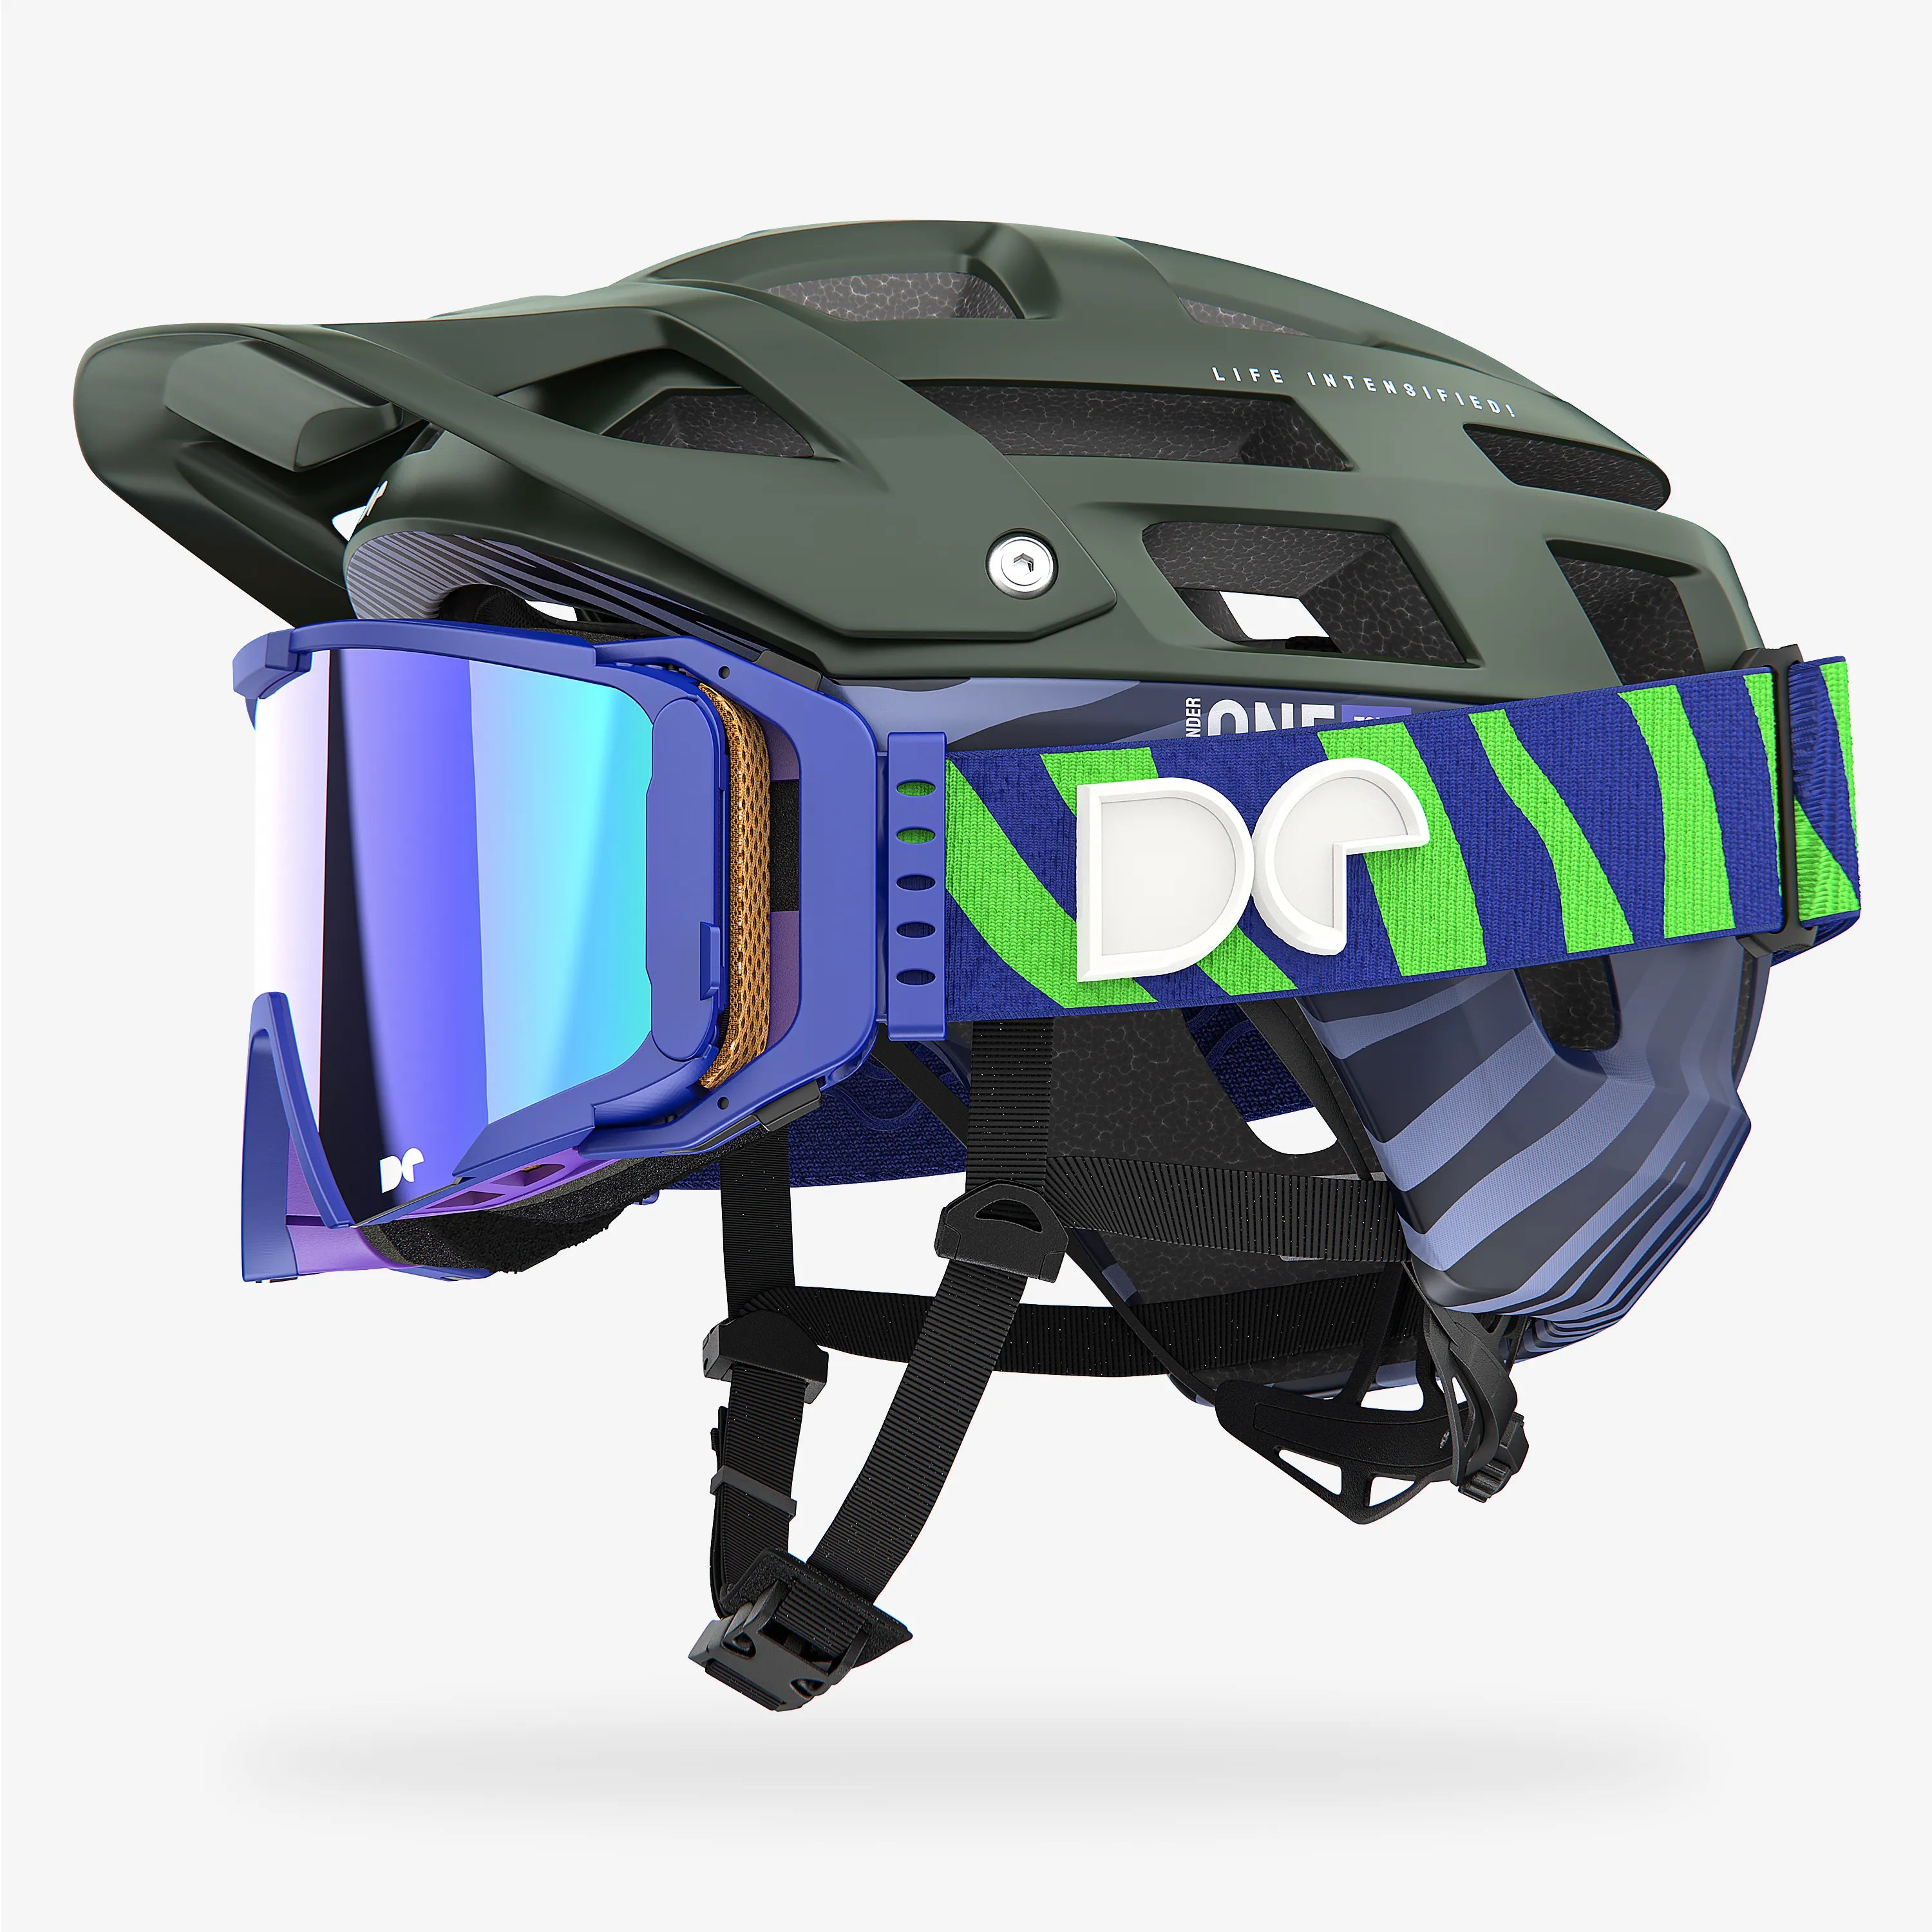 Defender One Tour Forest Green Mountain Bike Helmet + Sporter Boostup